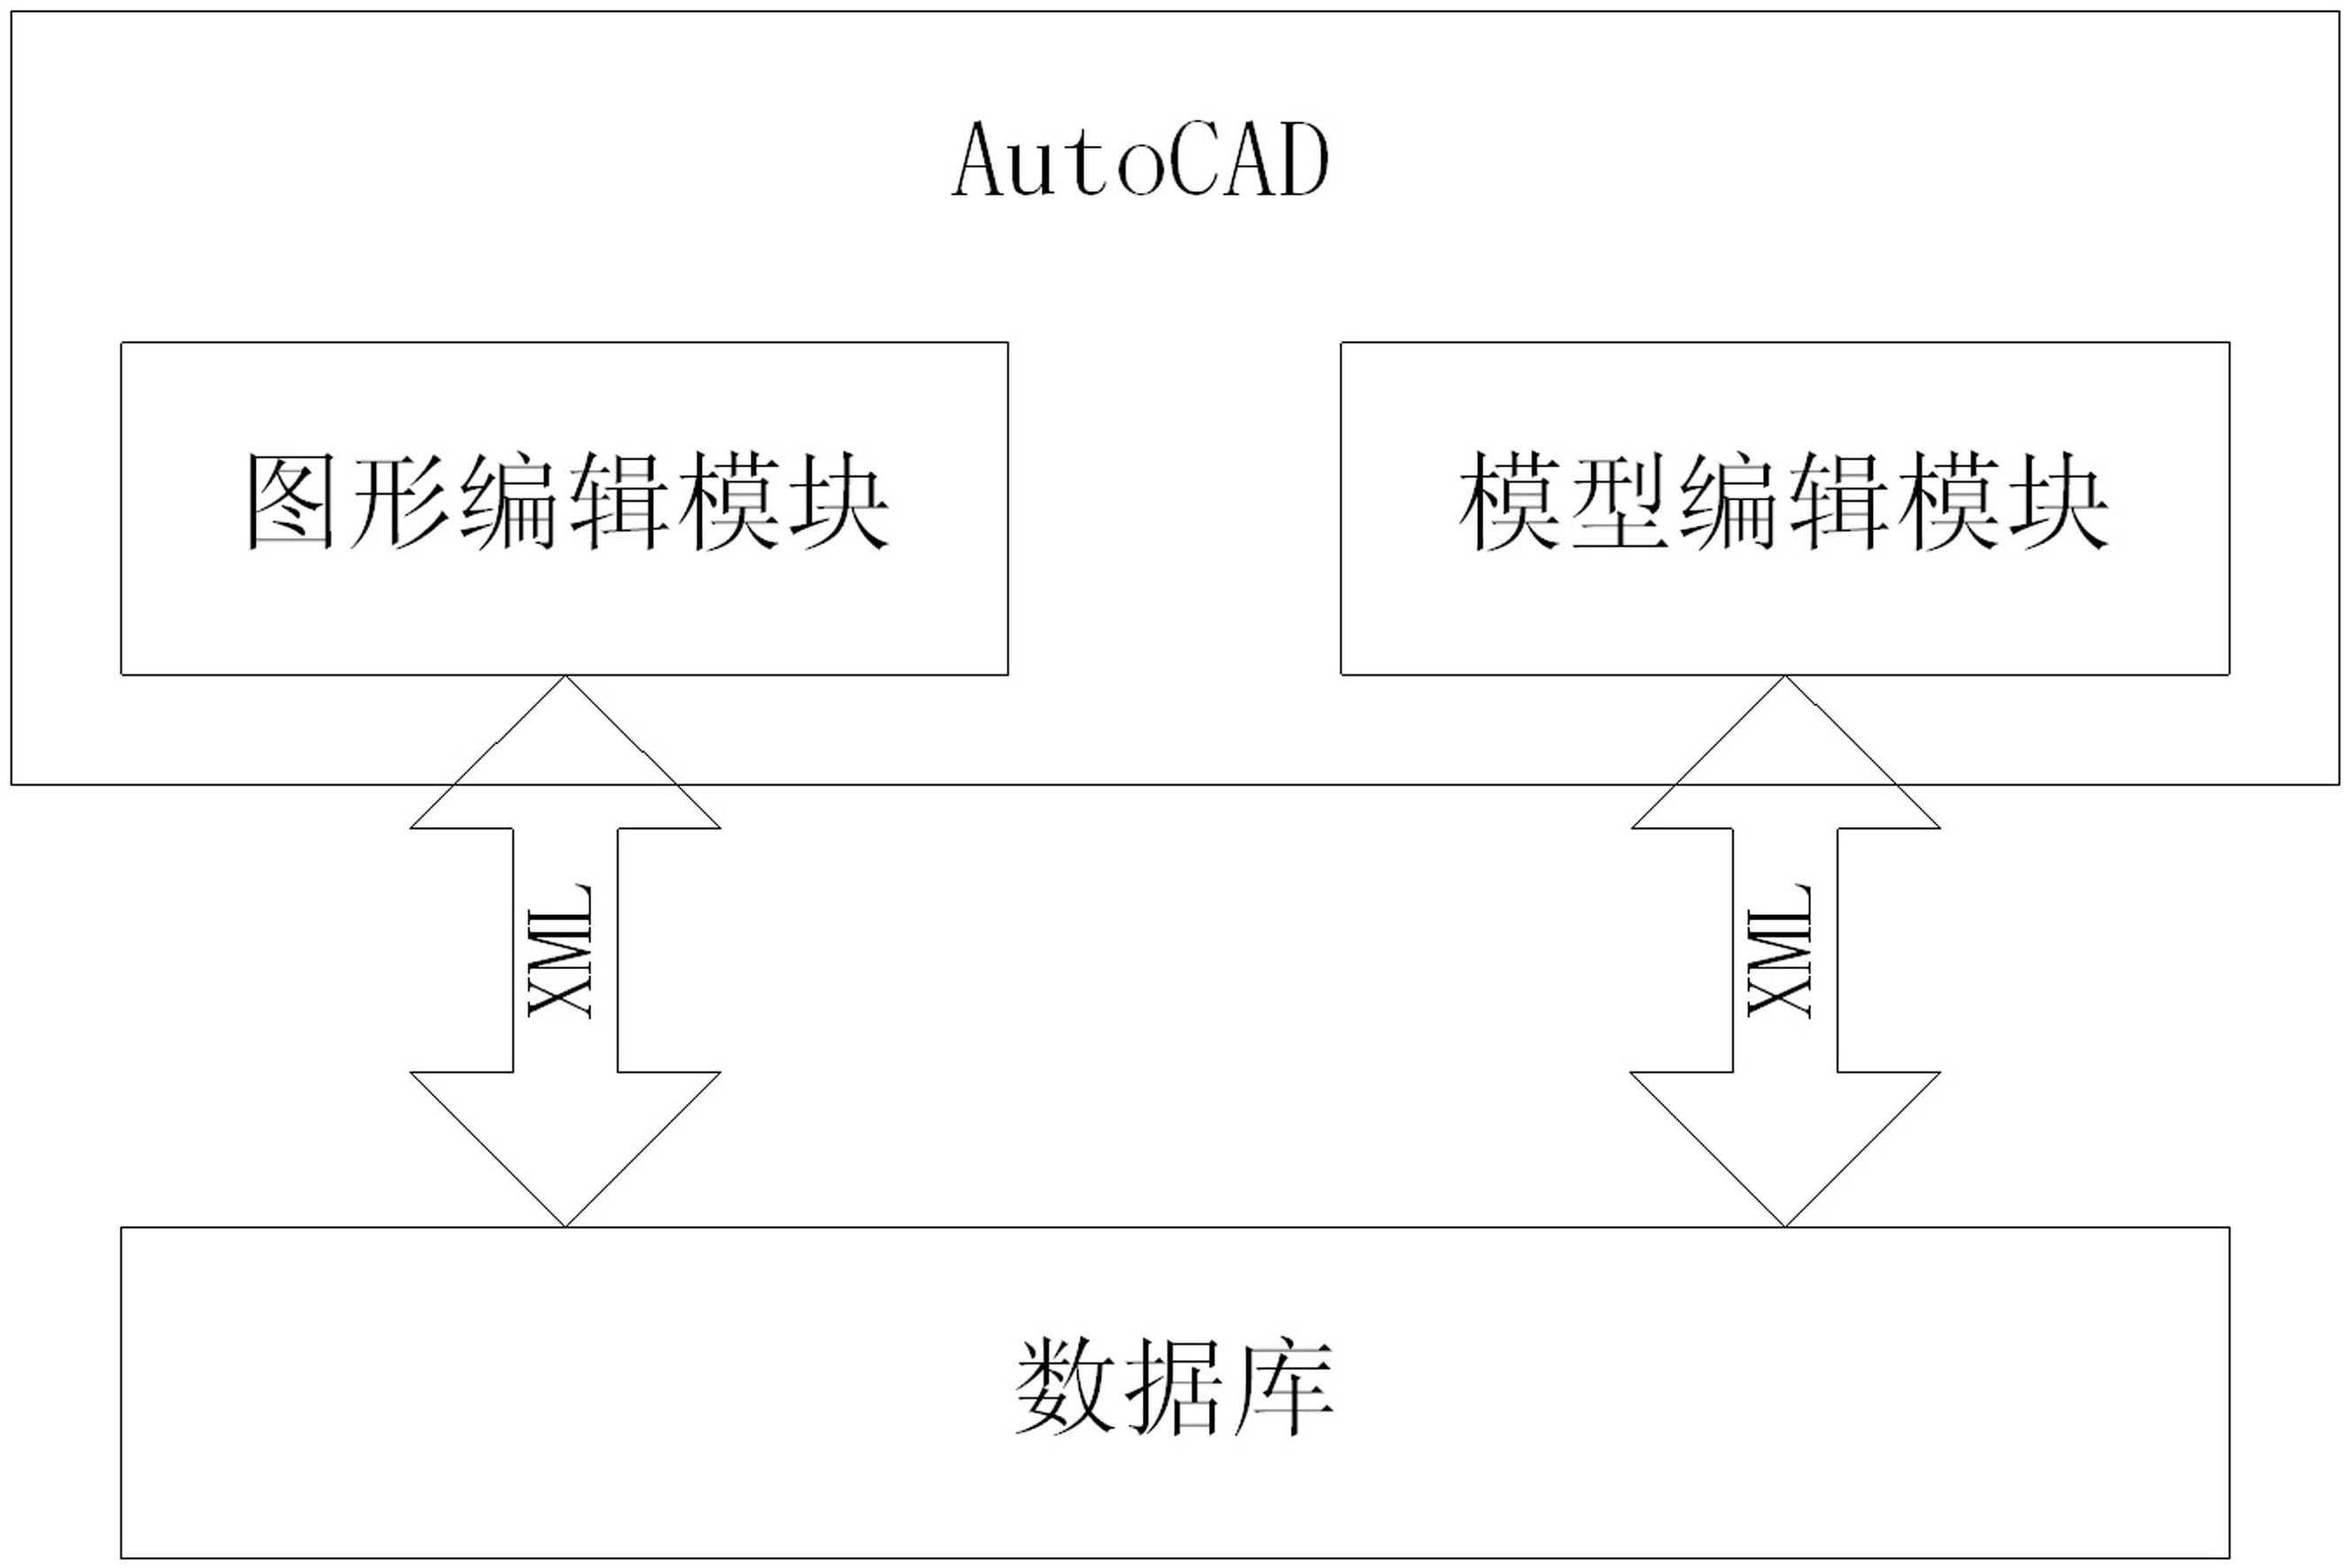 Graphical intelligent transformer substation model design method based on computer-aided design (CAD)